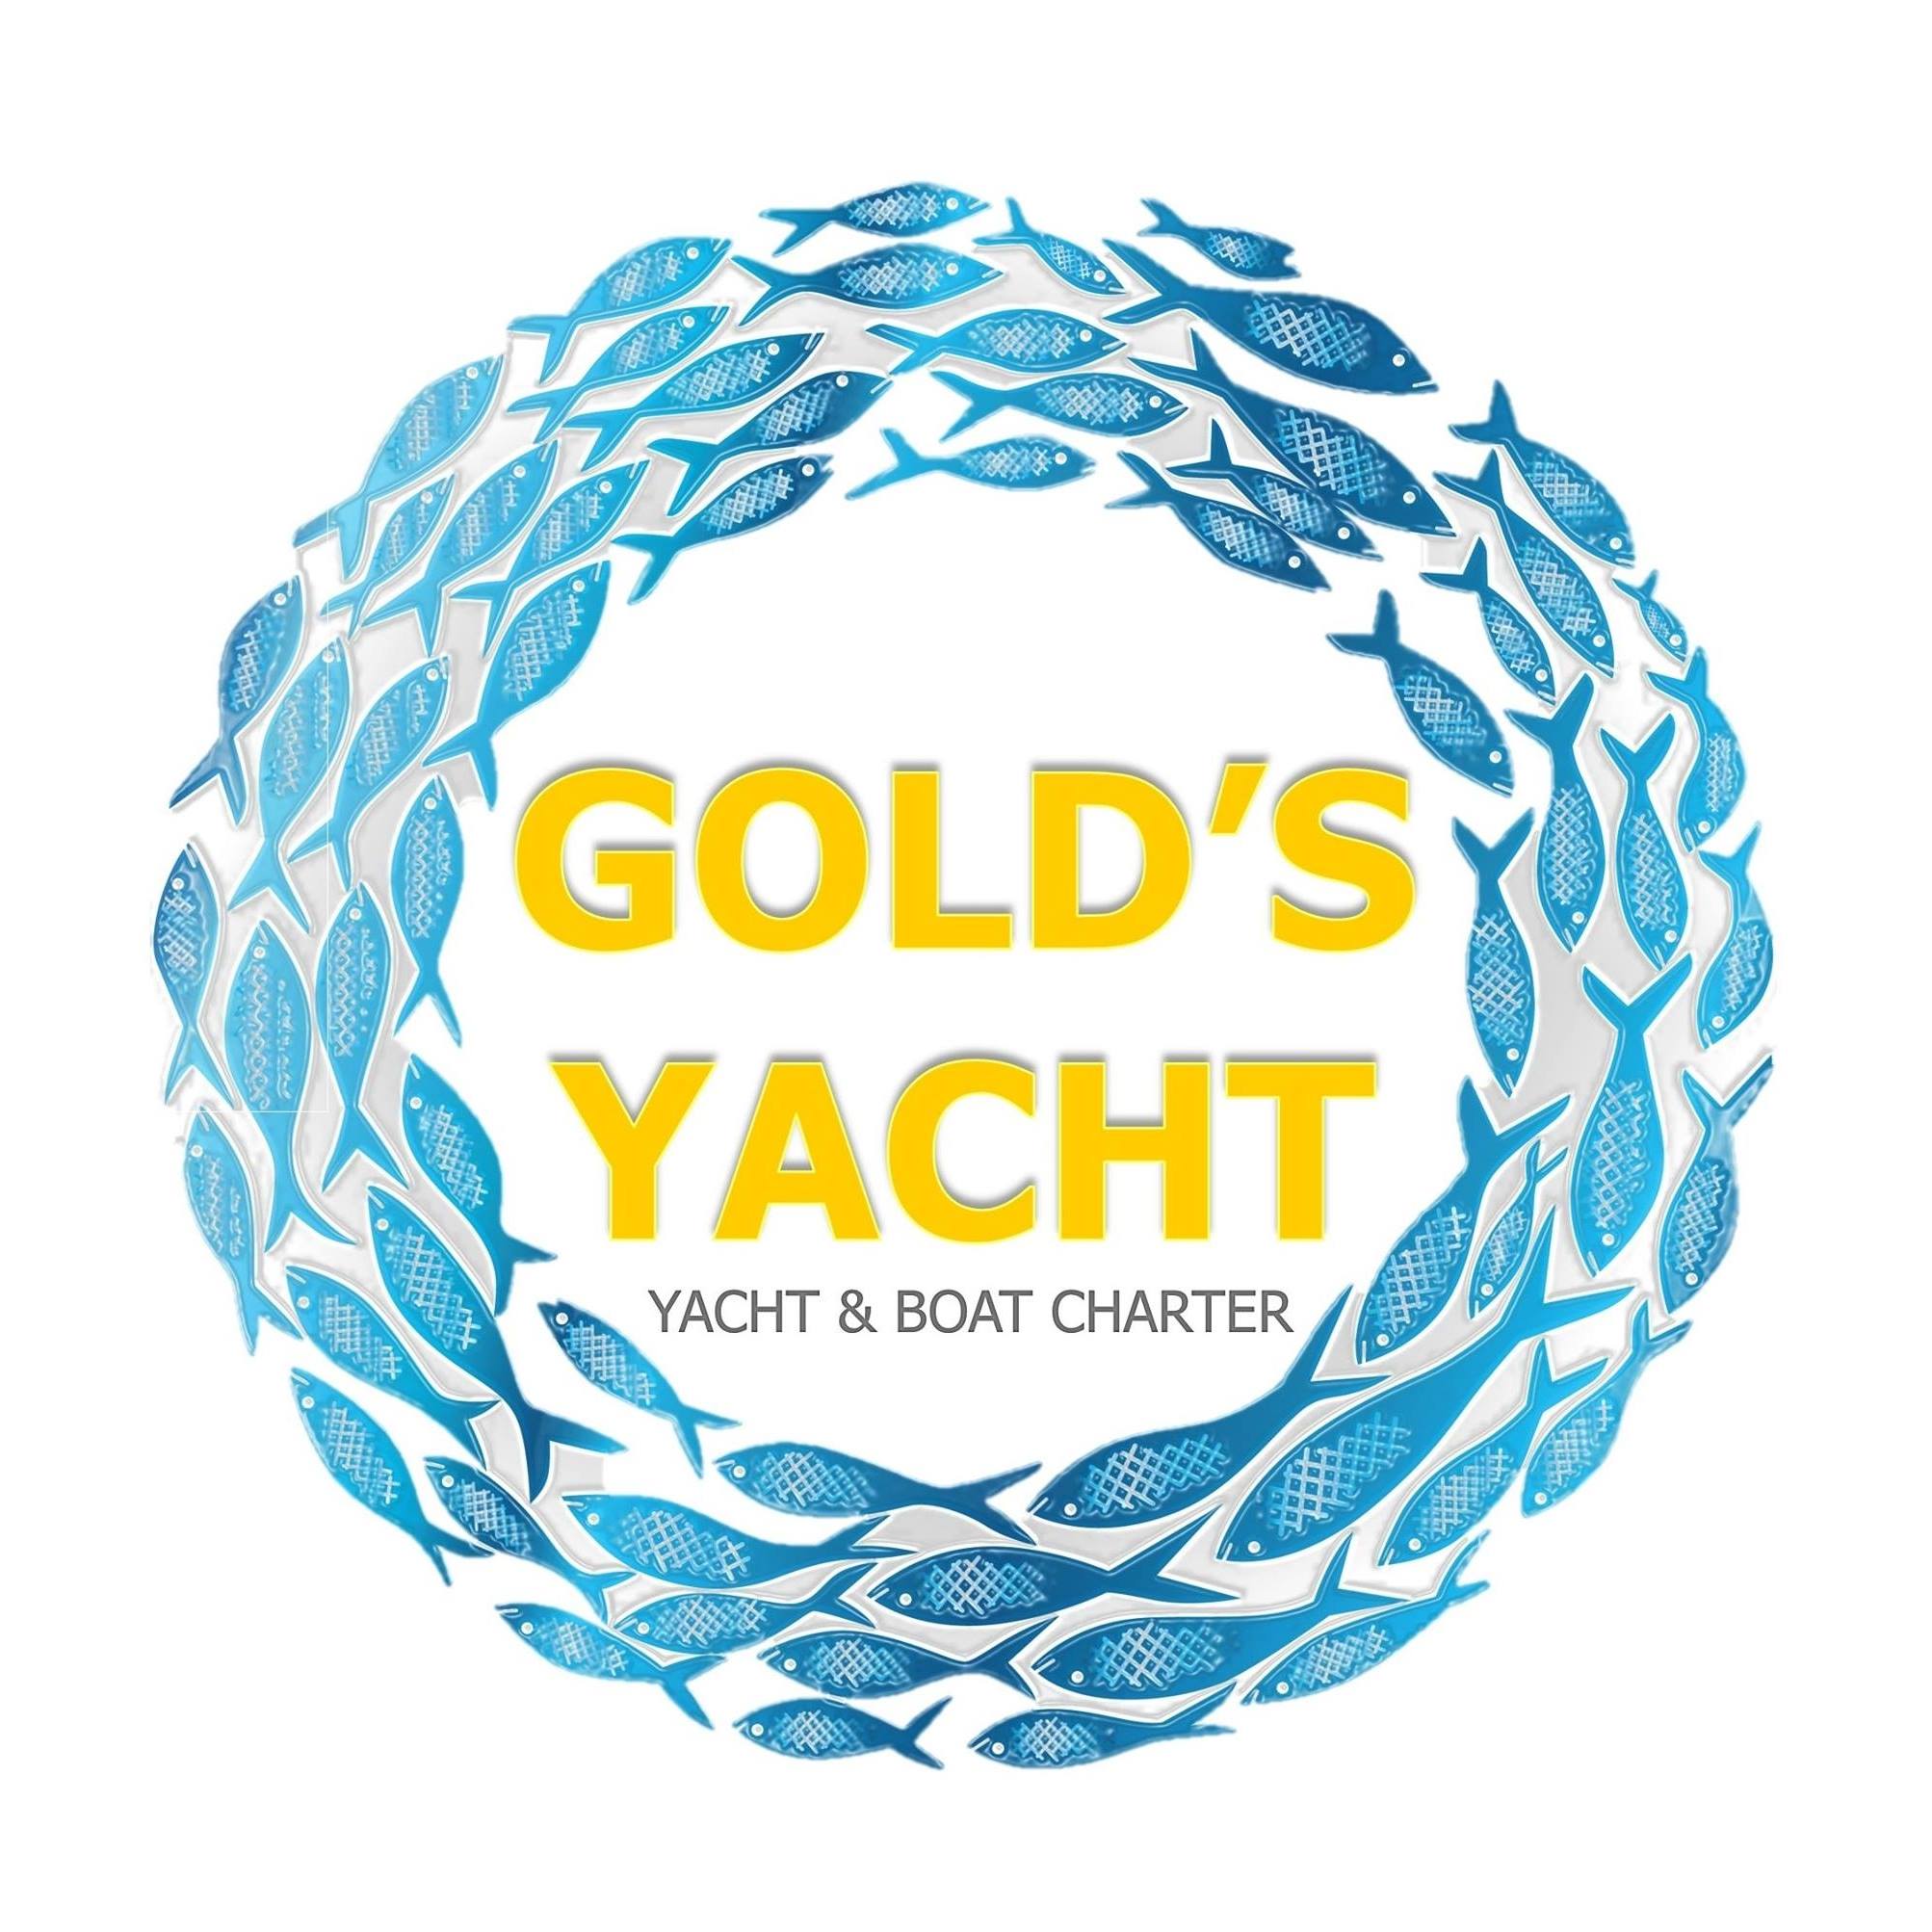 Marketing for Dubai luxury yacht rental – Golds yacht